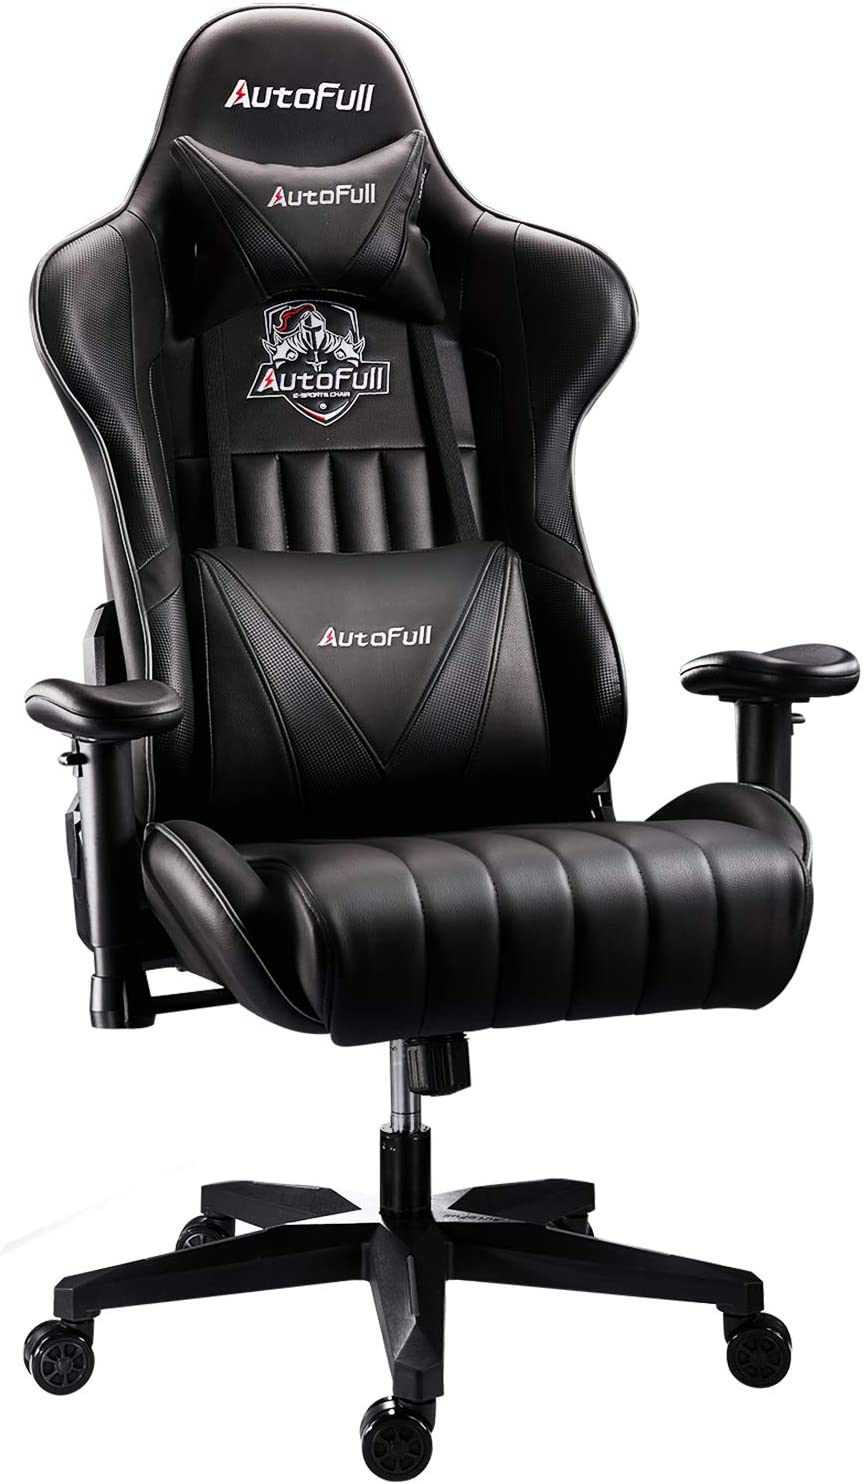 Autofull Racing Style Gaming Chair